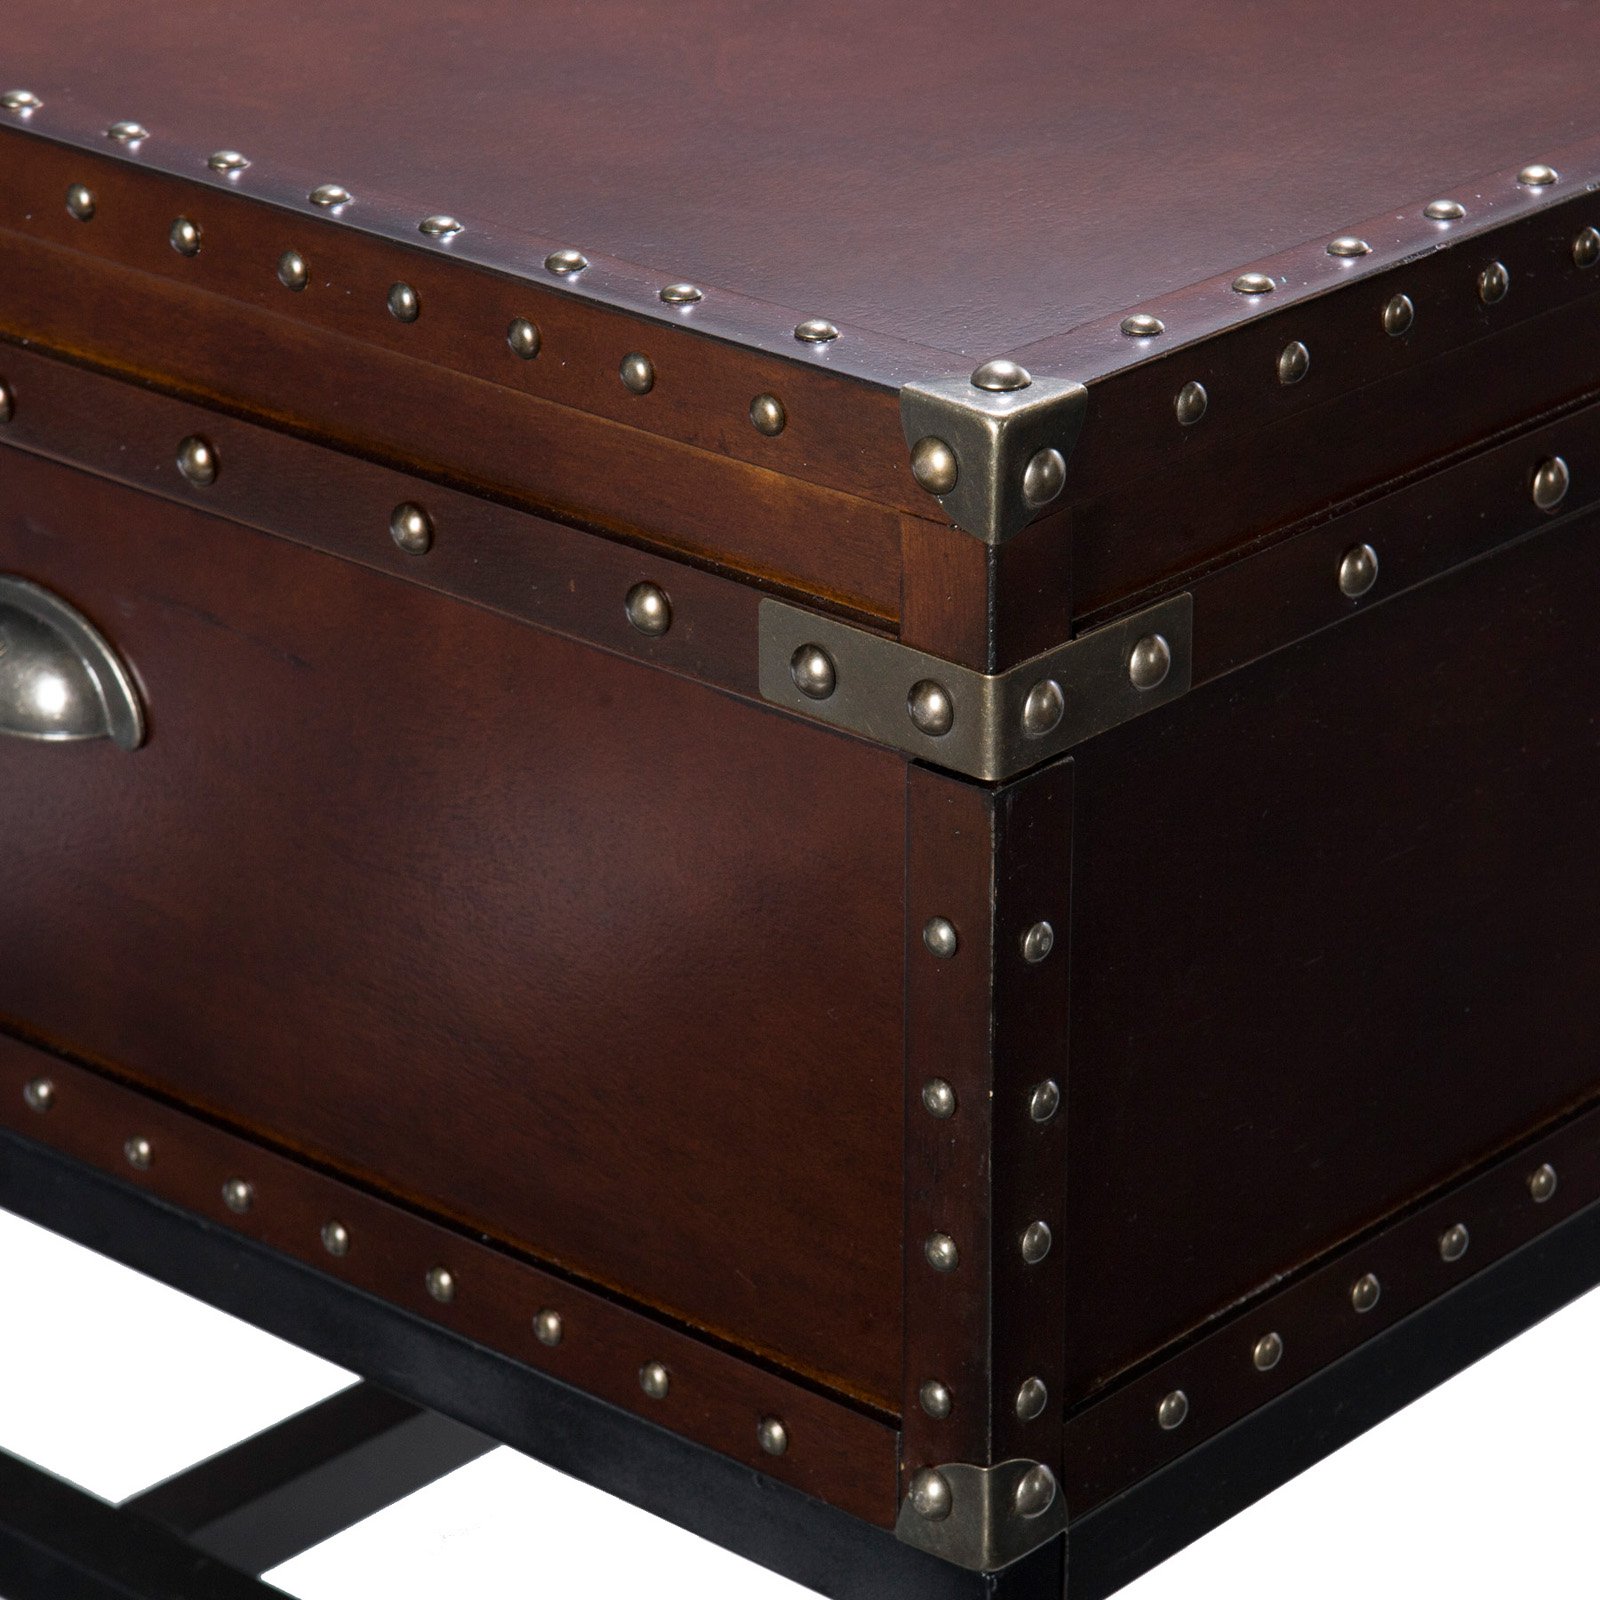 SEI Furniture Voyager Storage Coffee Table in Espresso - image 4 of 5